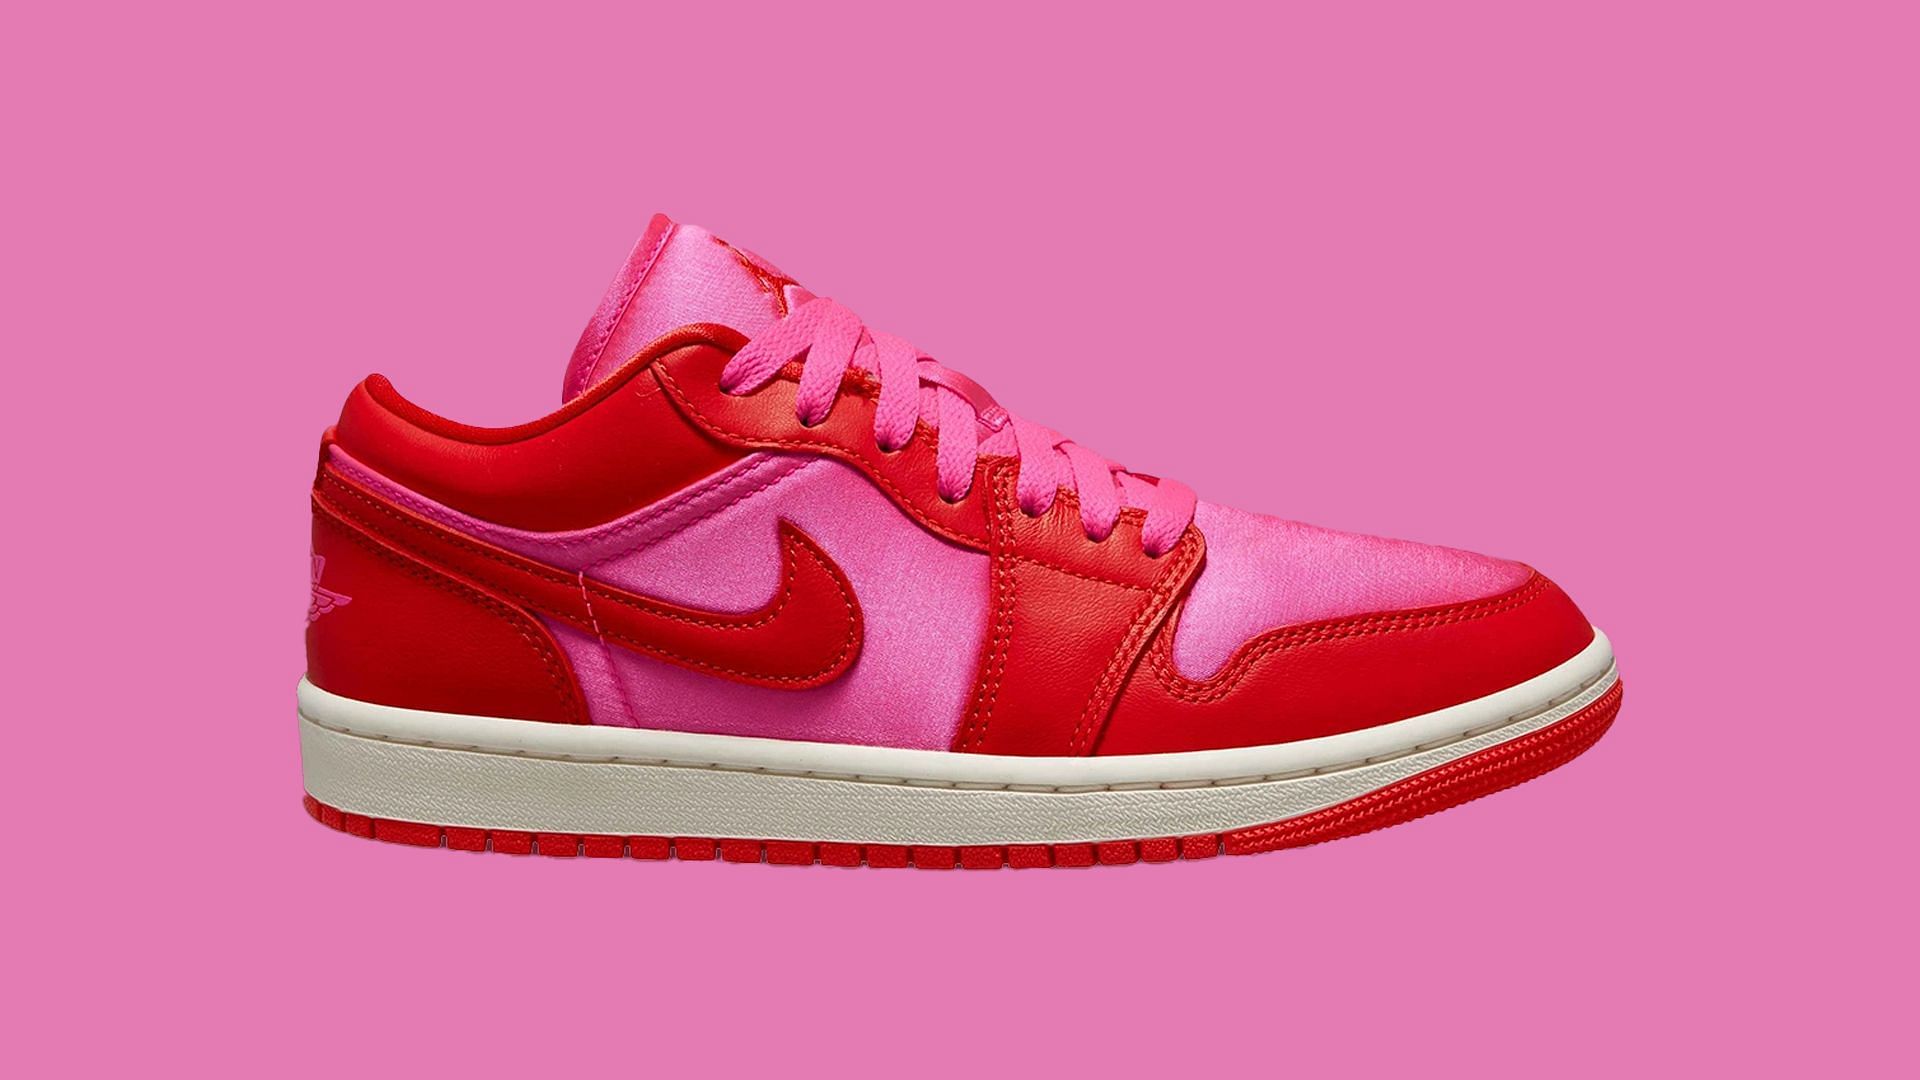 Nike Air Jordan 1 Low "Pink sneakers: to get, price, and more details explored